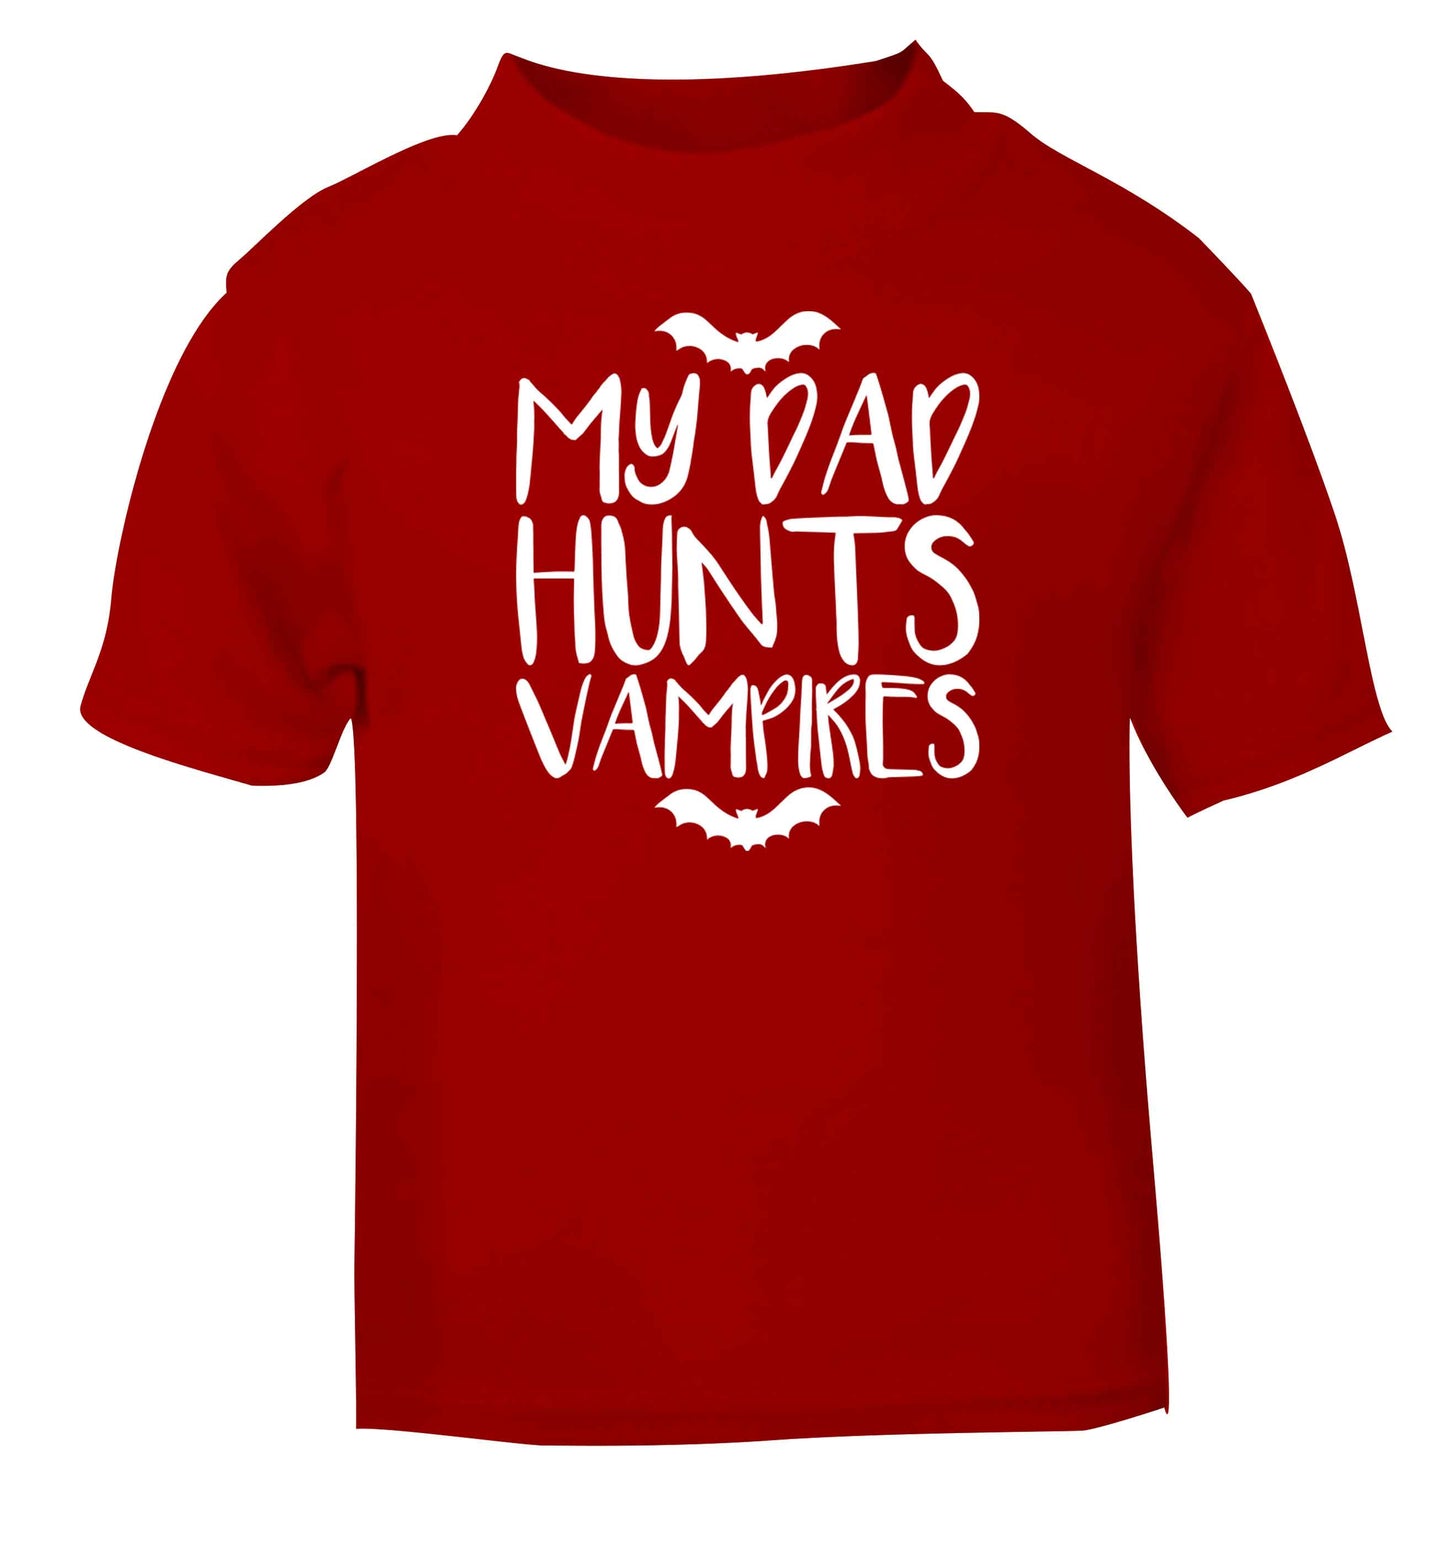 My dad hunts vampires red baby toddler Tshirt 2 Years